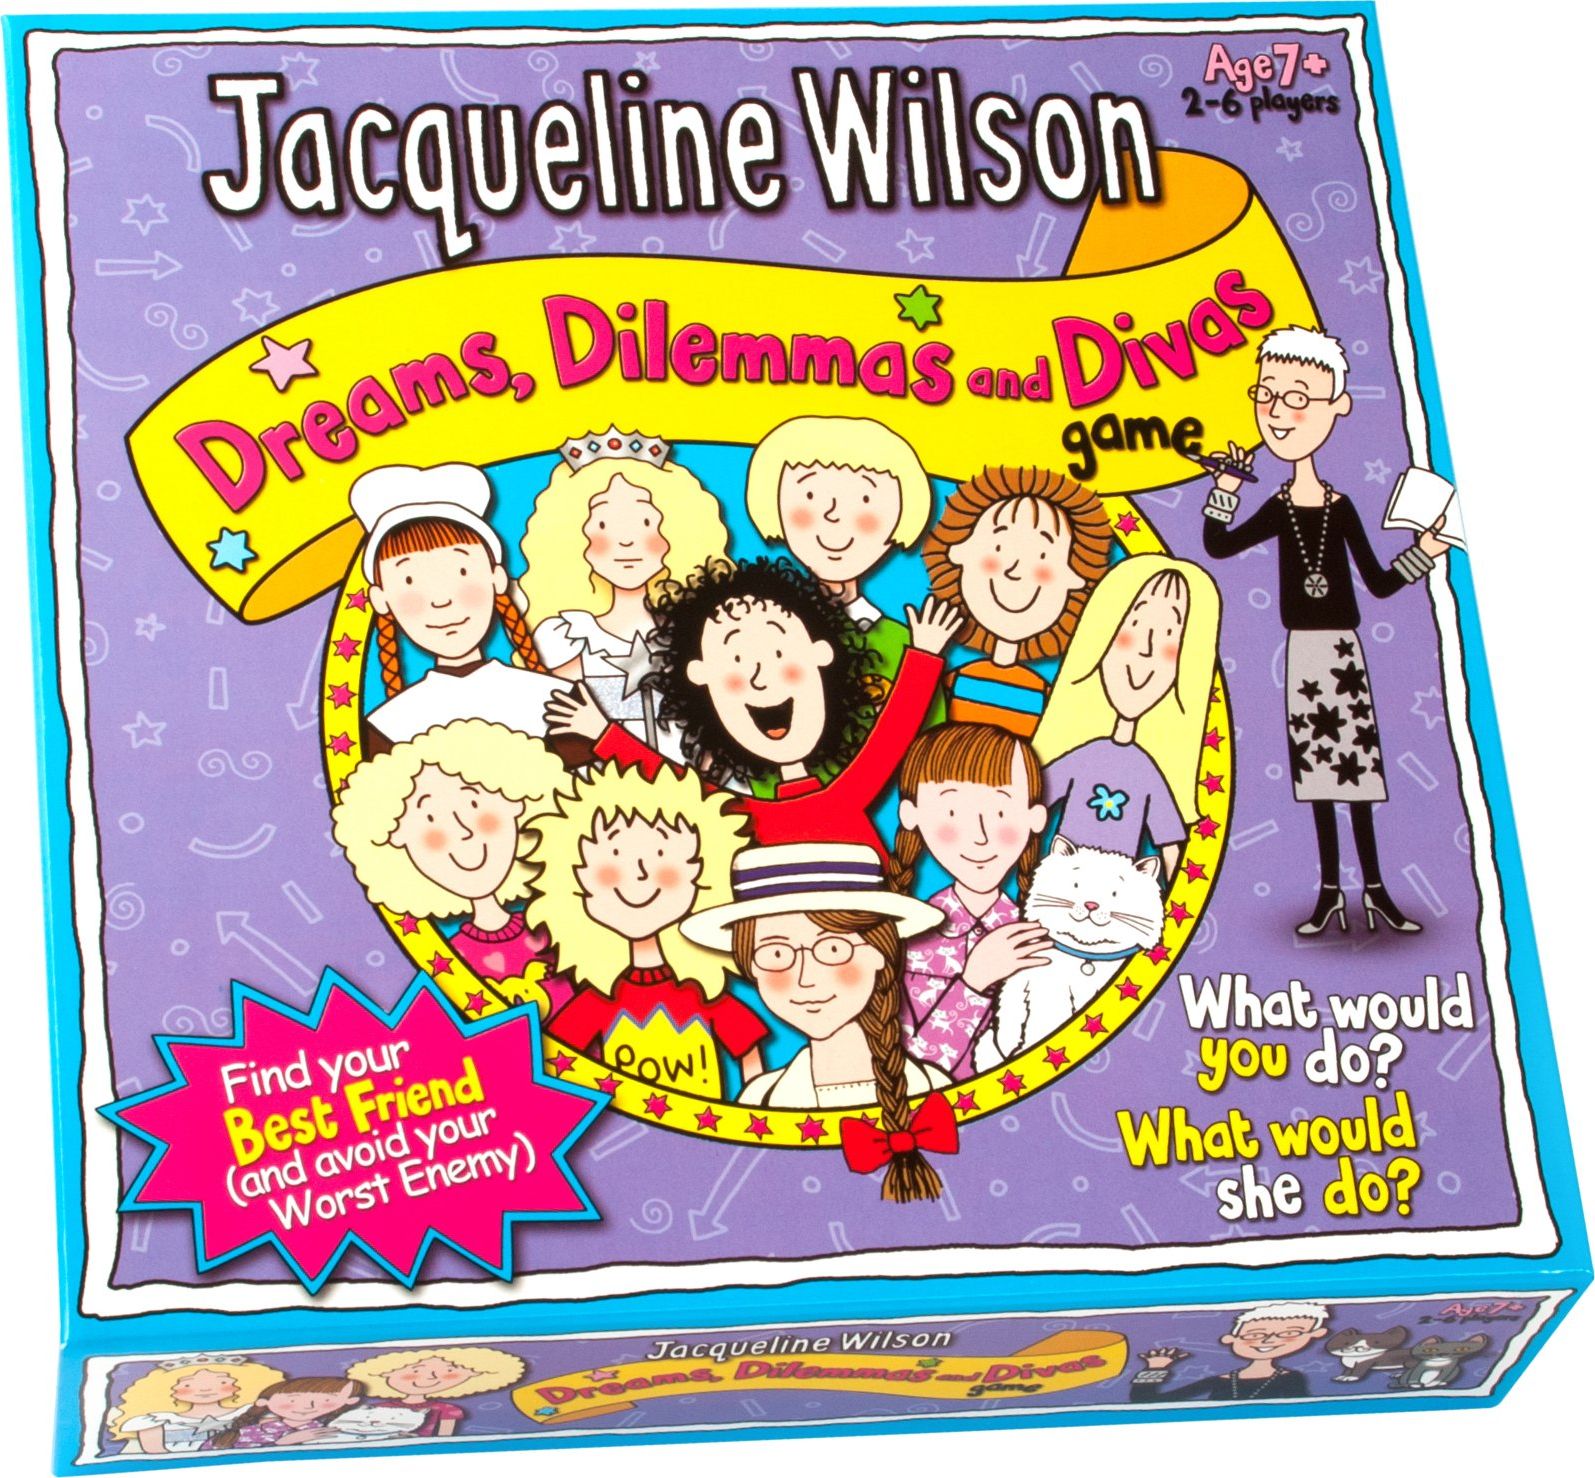 Jacqueline Wilson - Dreams, dilemas and divas